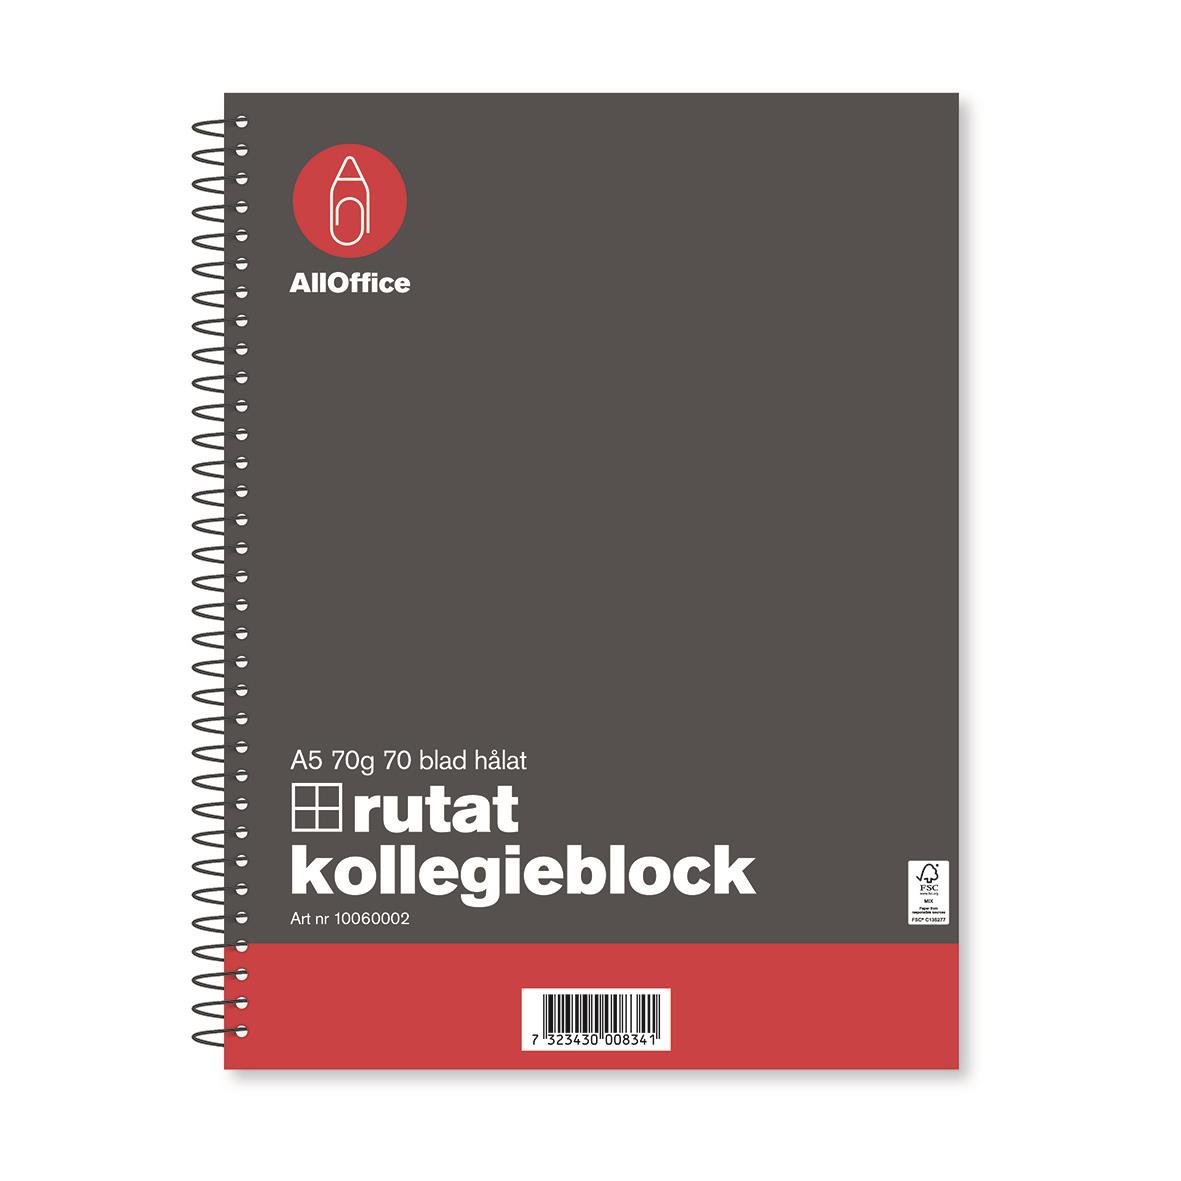 Kollegieblock AllOffice Rutat 70 Blad A5 70g 10060002_1